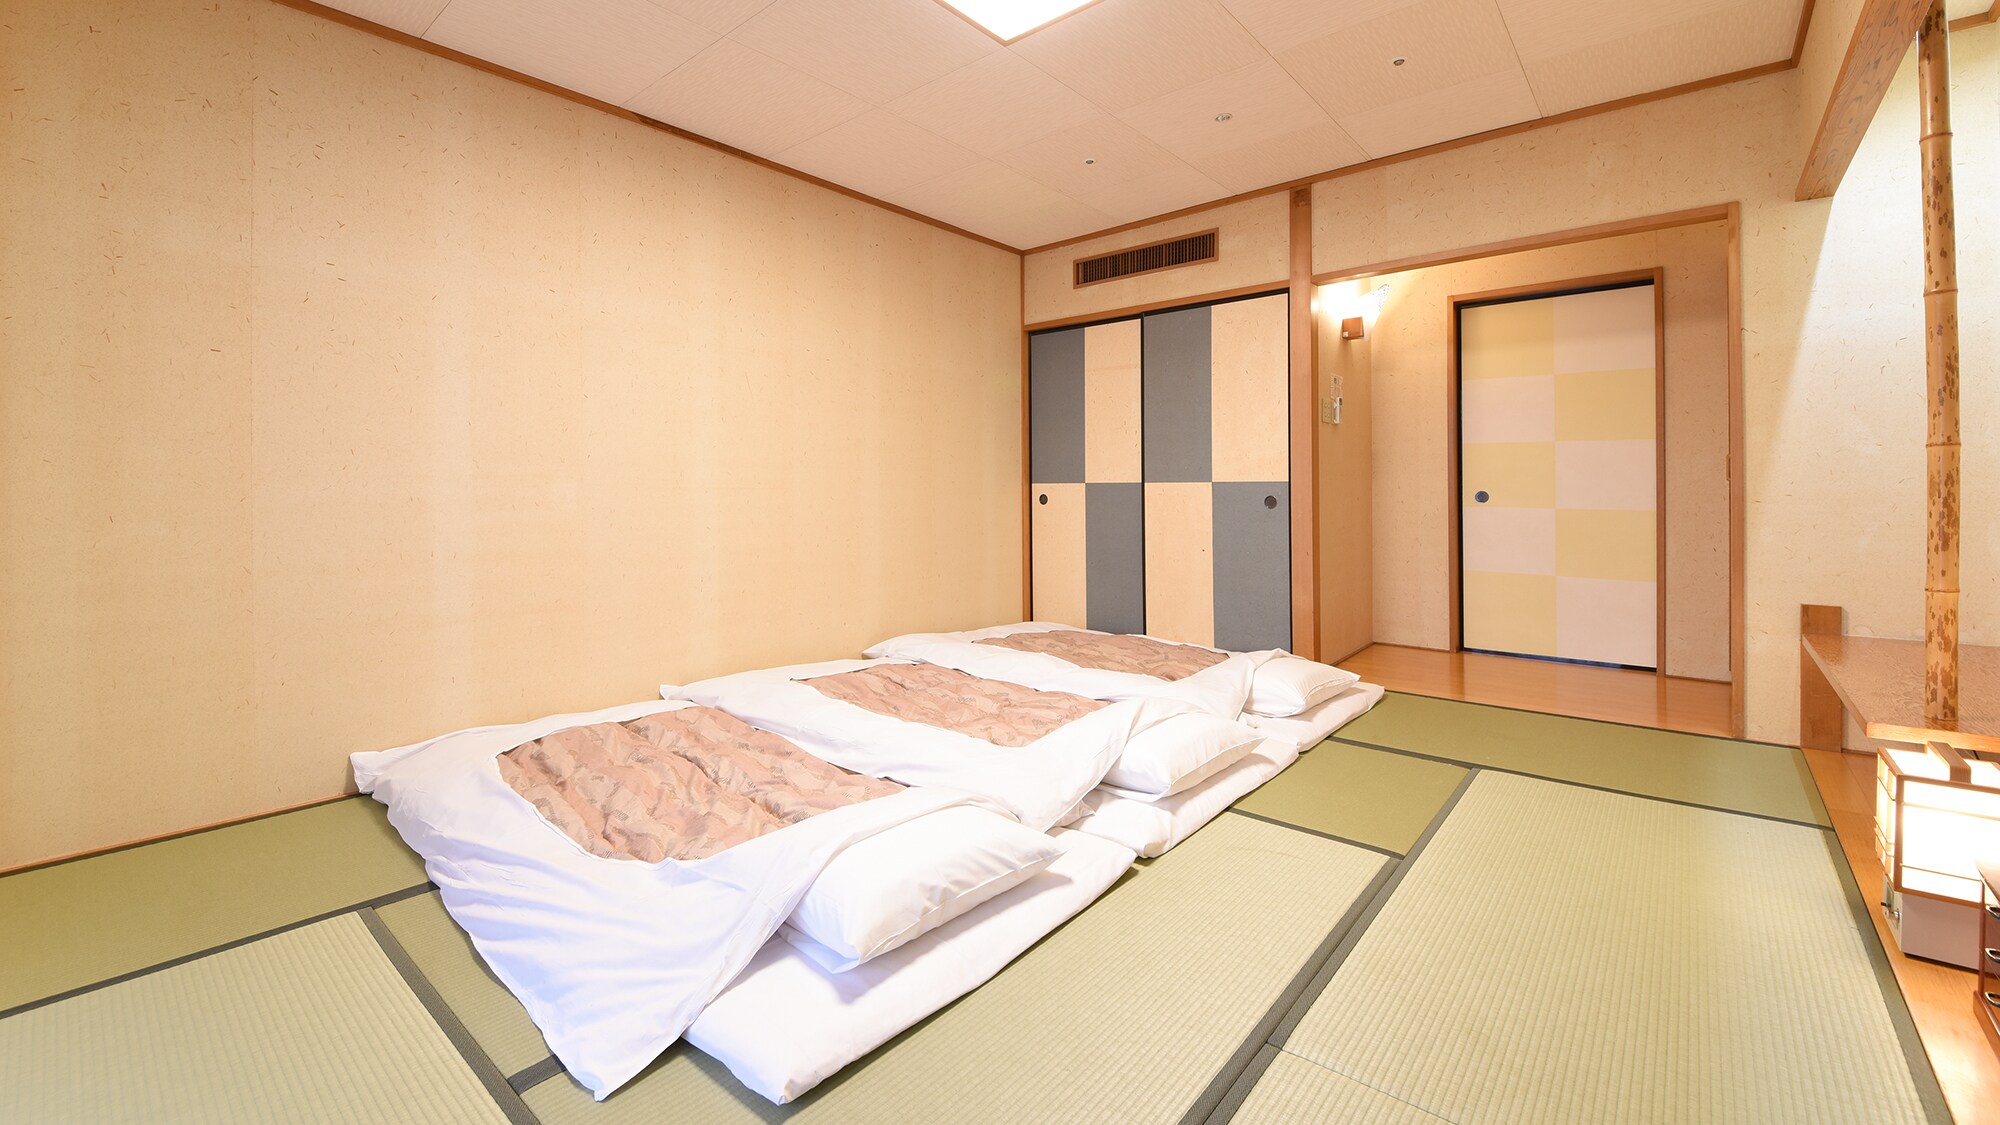 * Japanese-style room 10 tatami mats